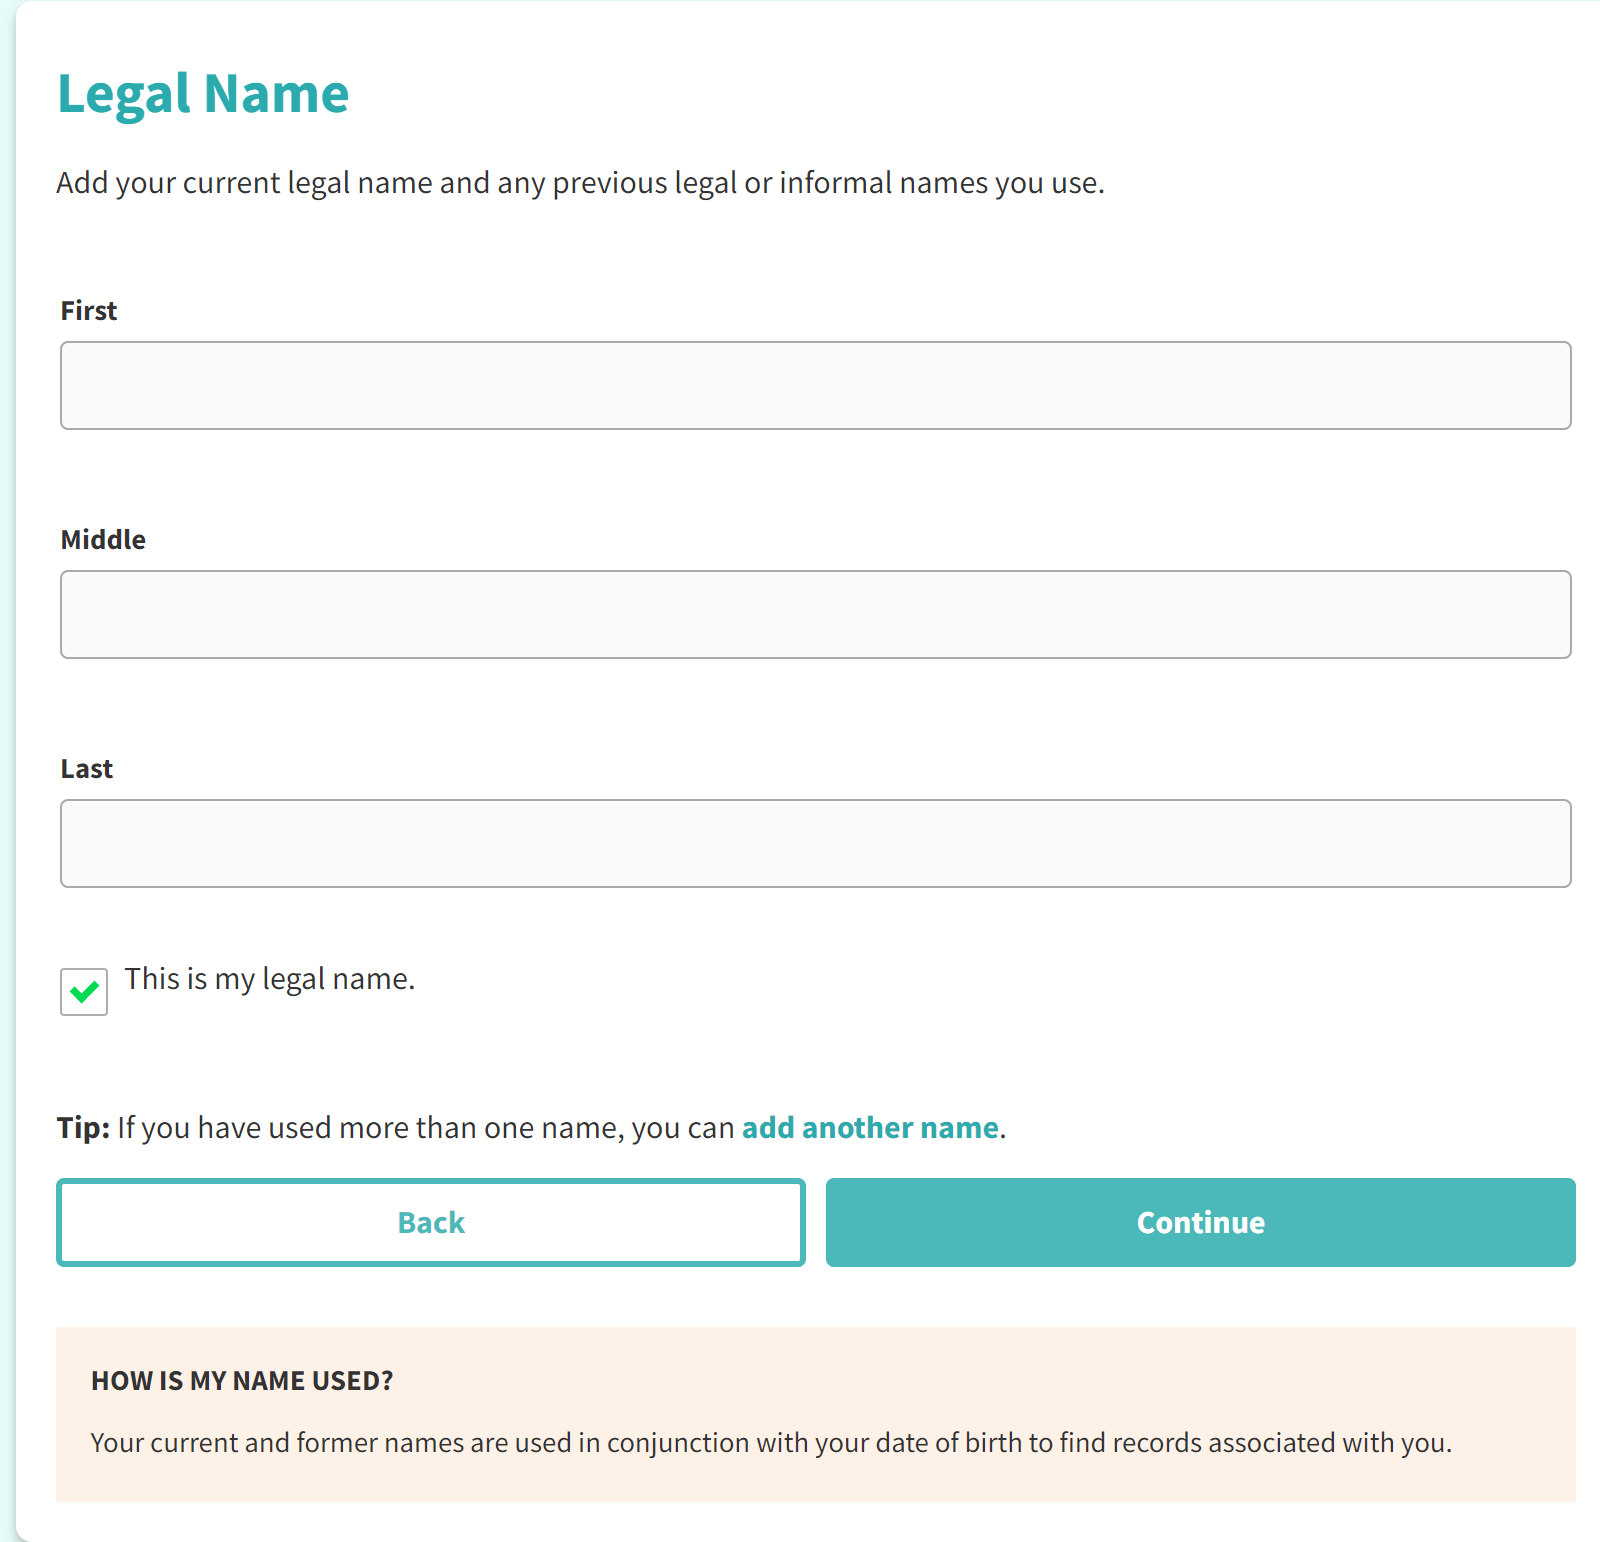 enter your legal name